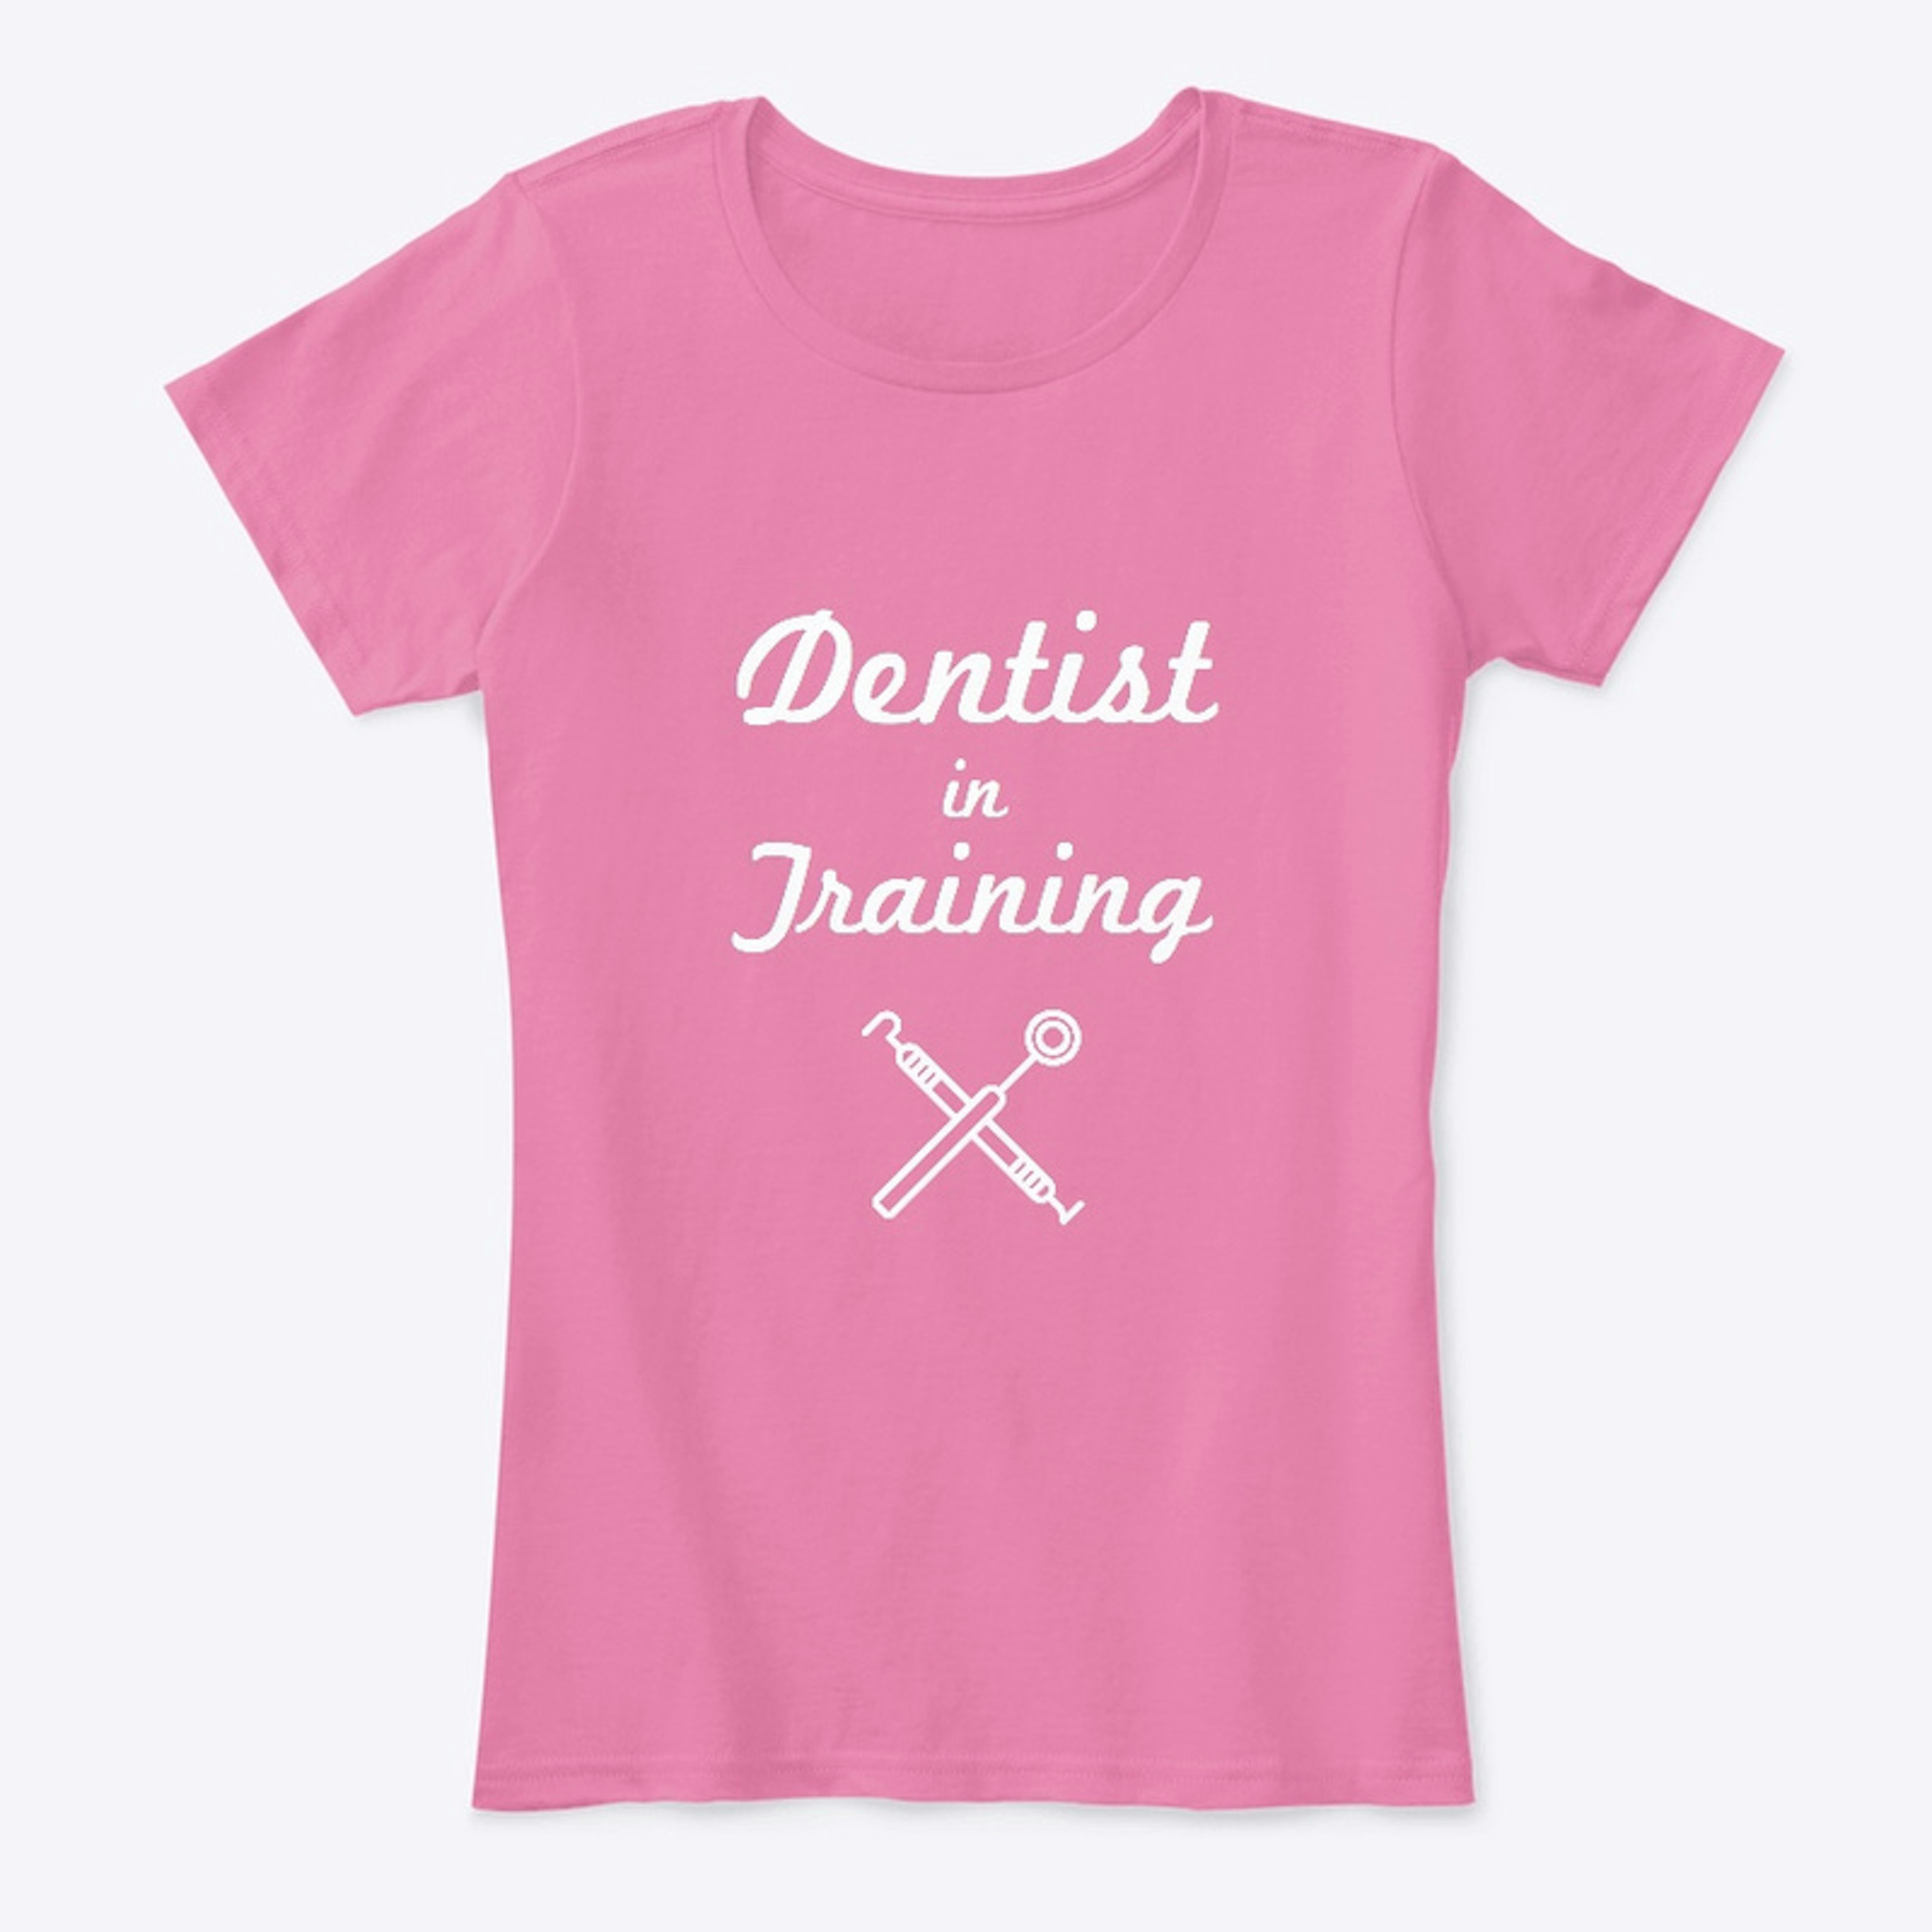 Dentist in Training